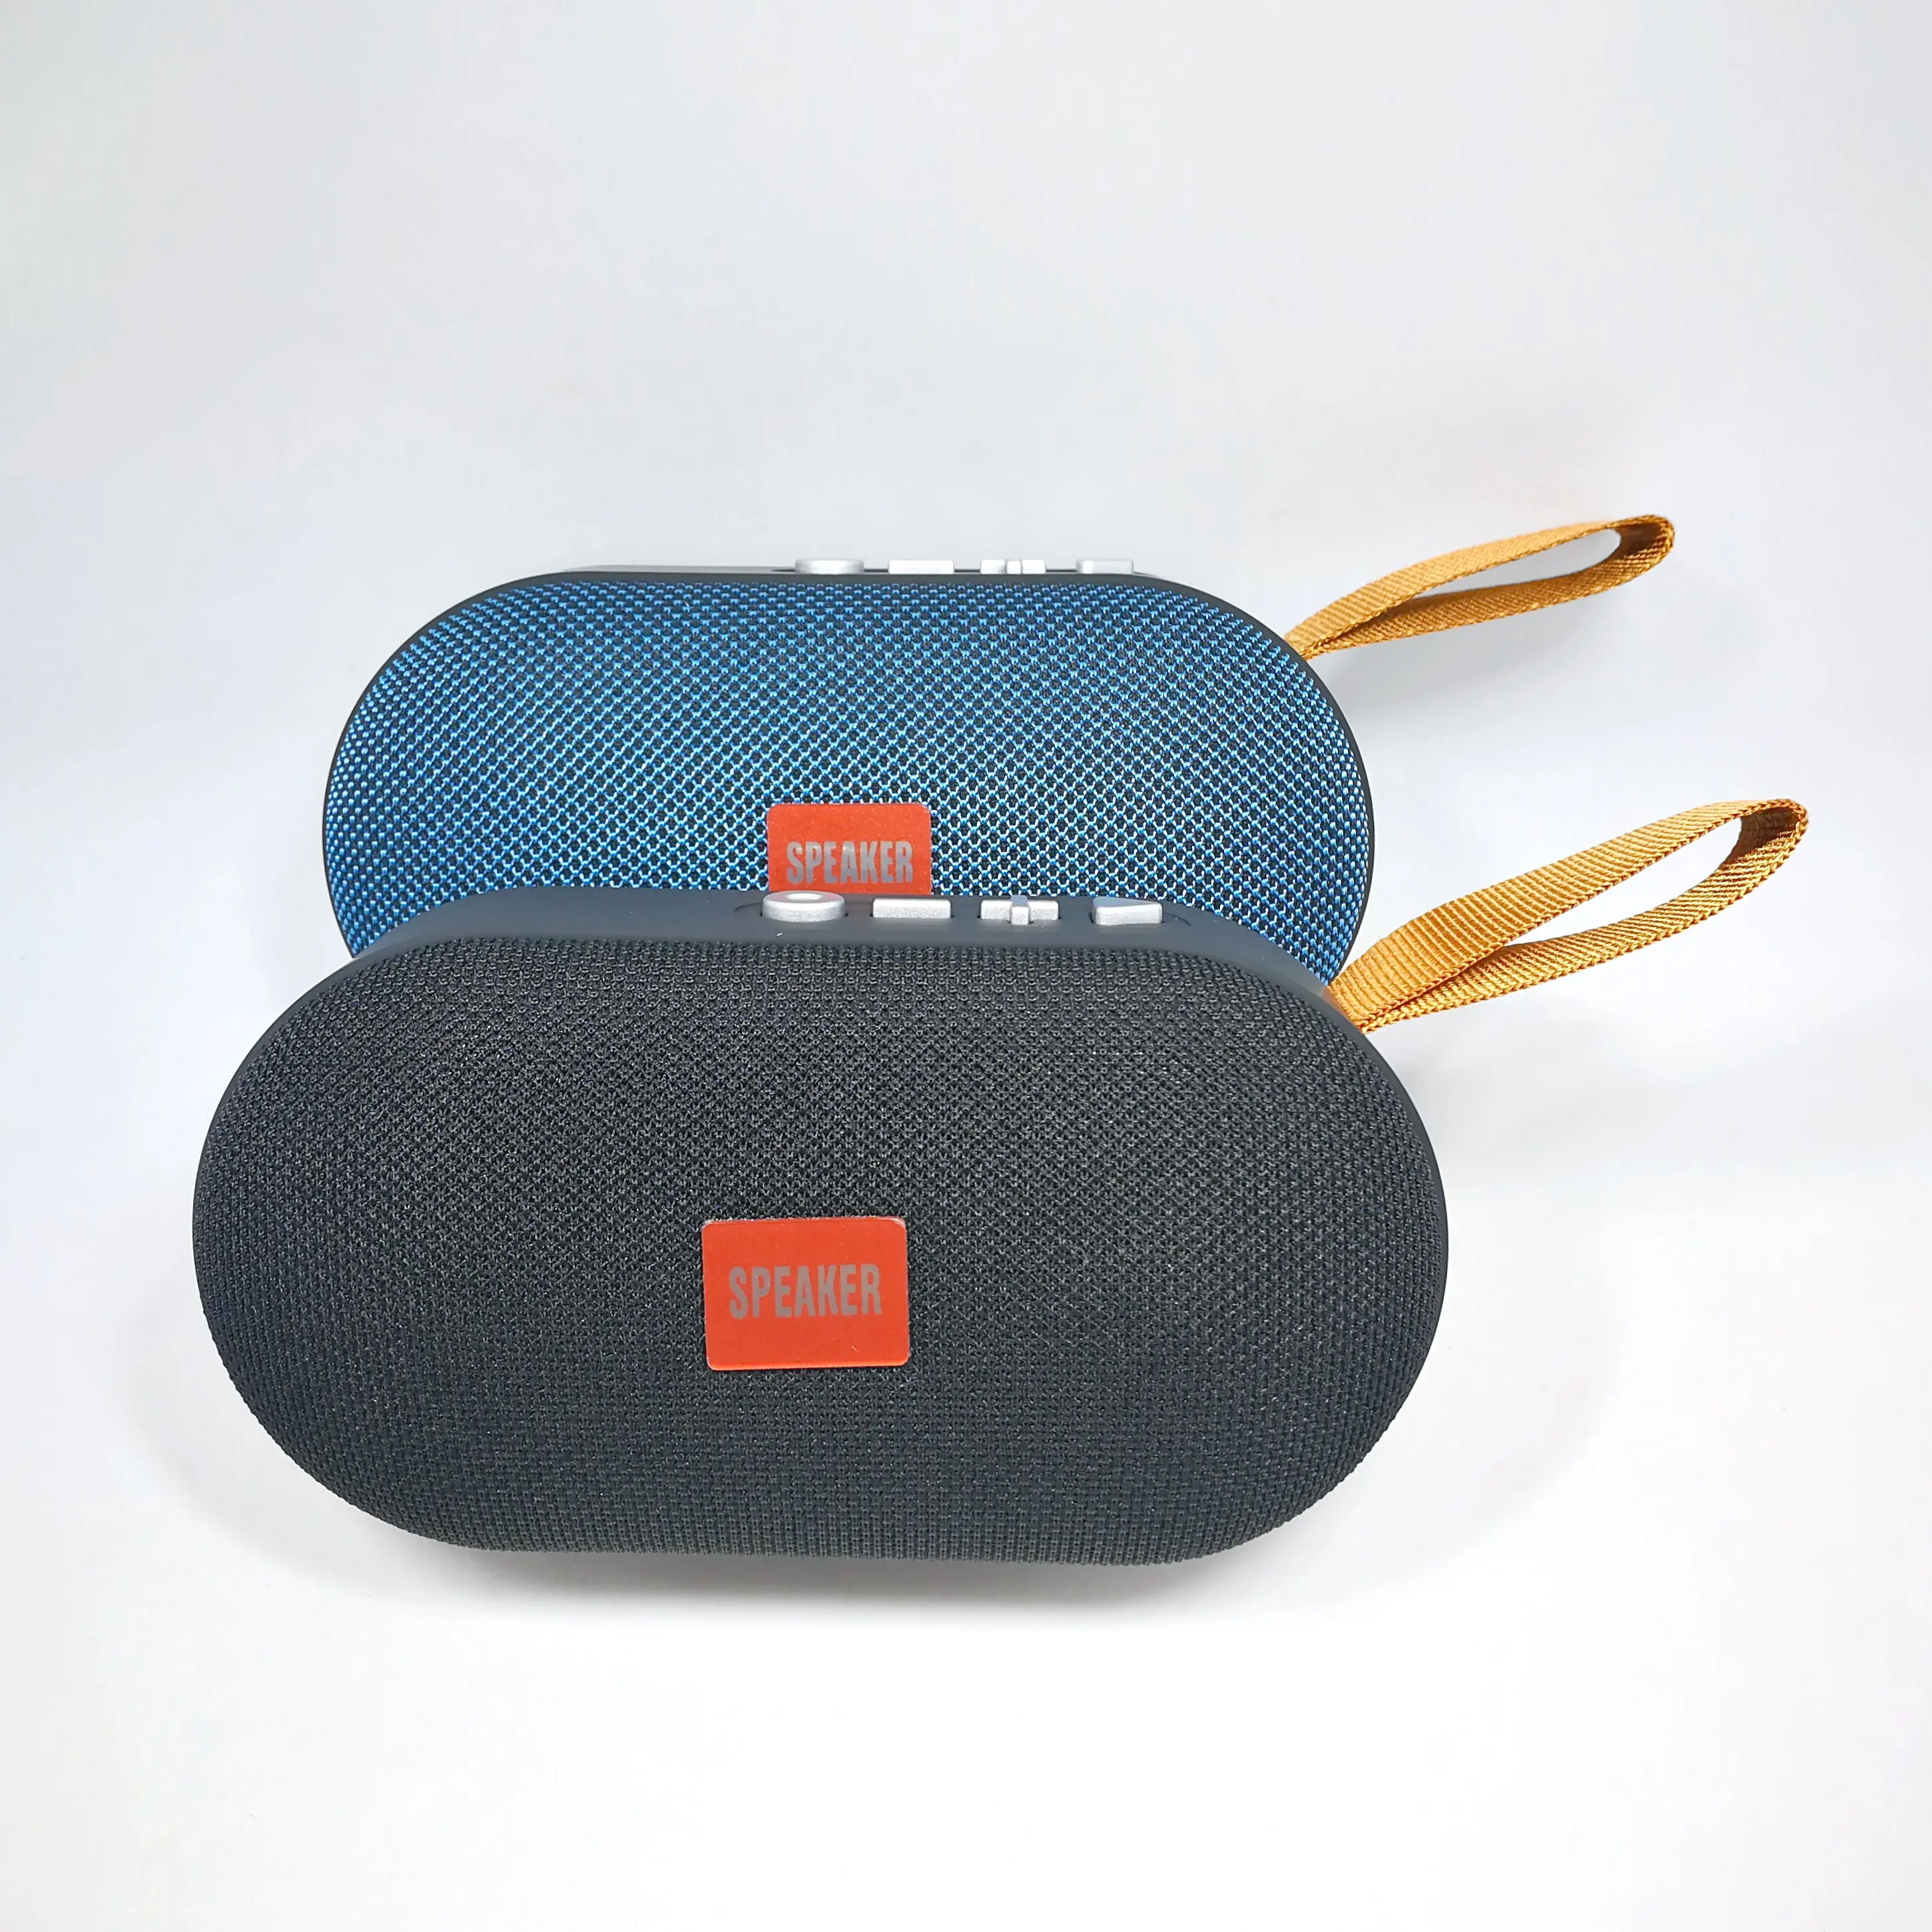 

New Fabric loud sound box subwoofer rich bass waterproof mini portable speaker audio wireless speakers